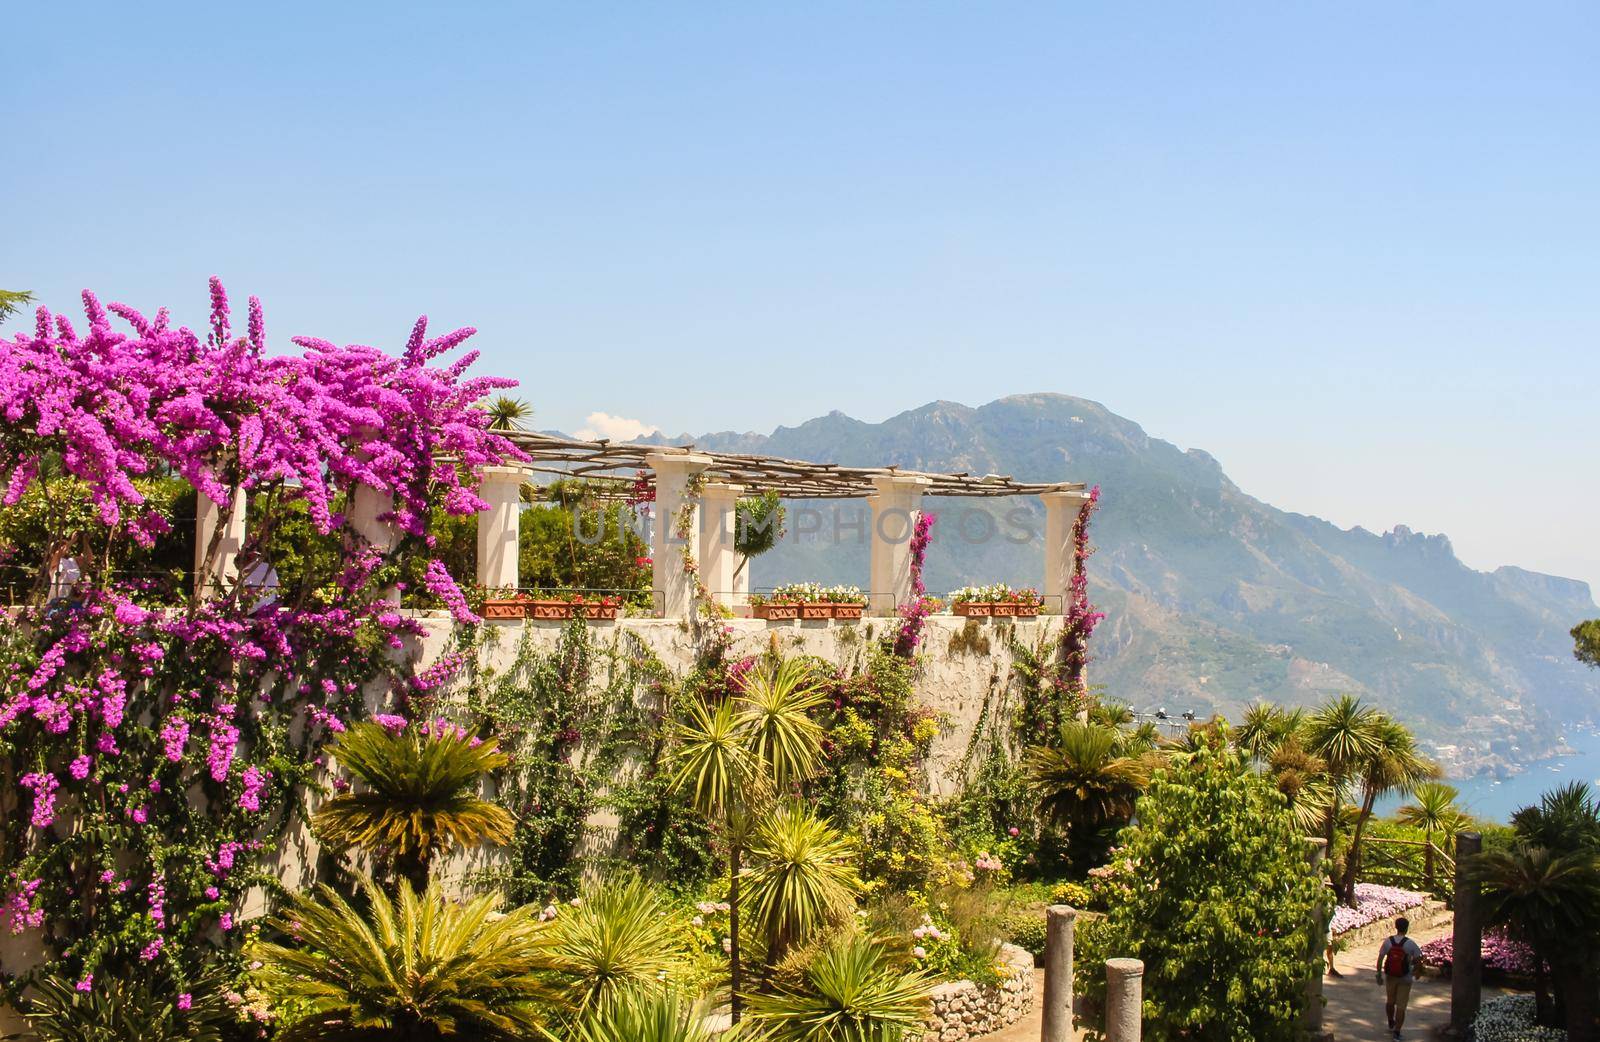 Vibrant Italian garden in the historic town of Ravello, overlooking the summer Amalfi coastline, Italy. High quality photo.